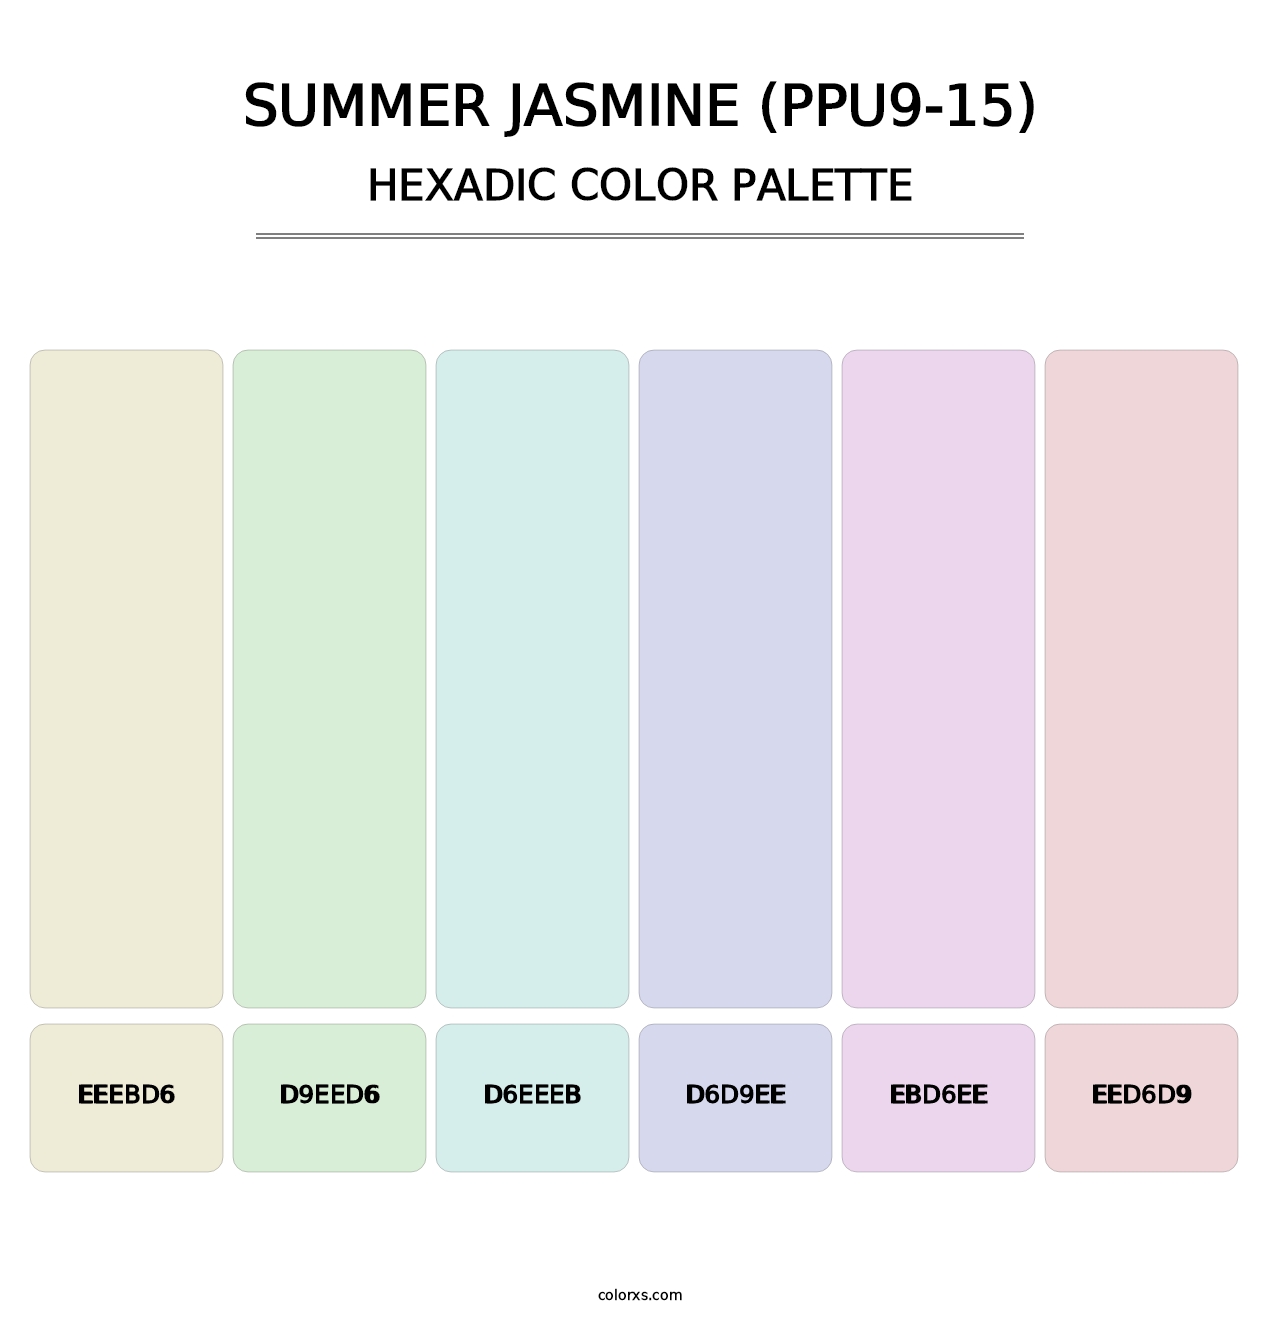 Summer Jasmine (PPU9-15) - Hexadic Color Palette